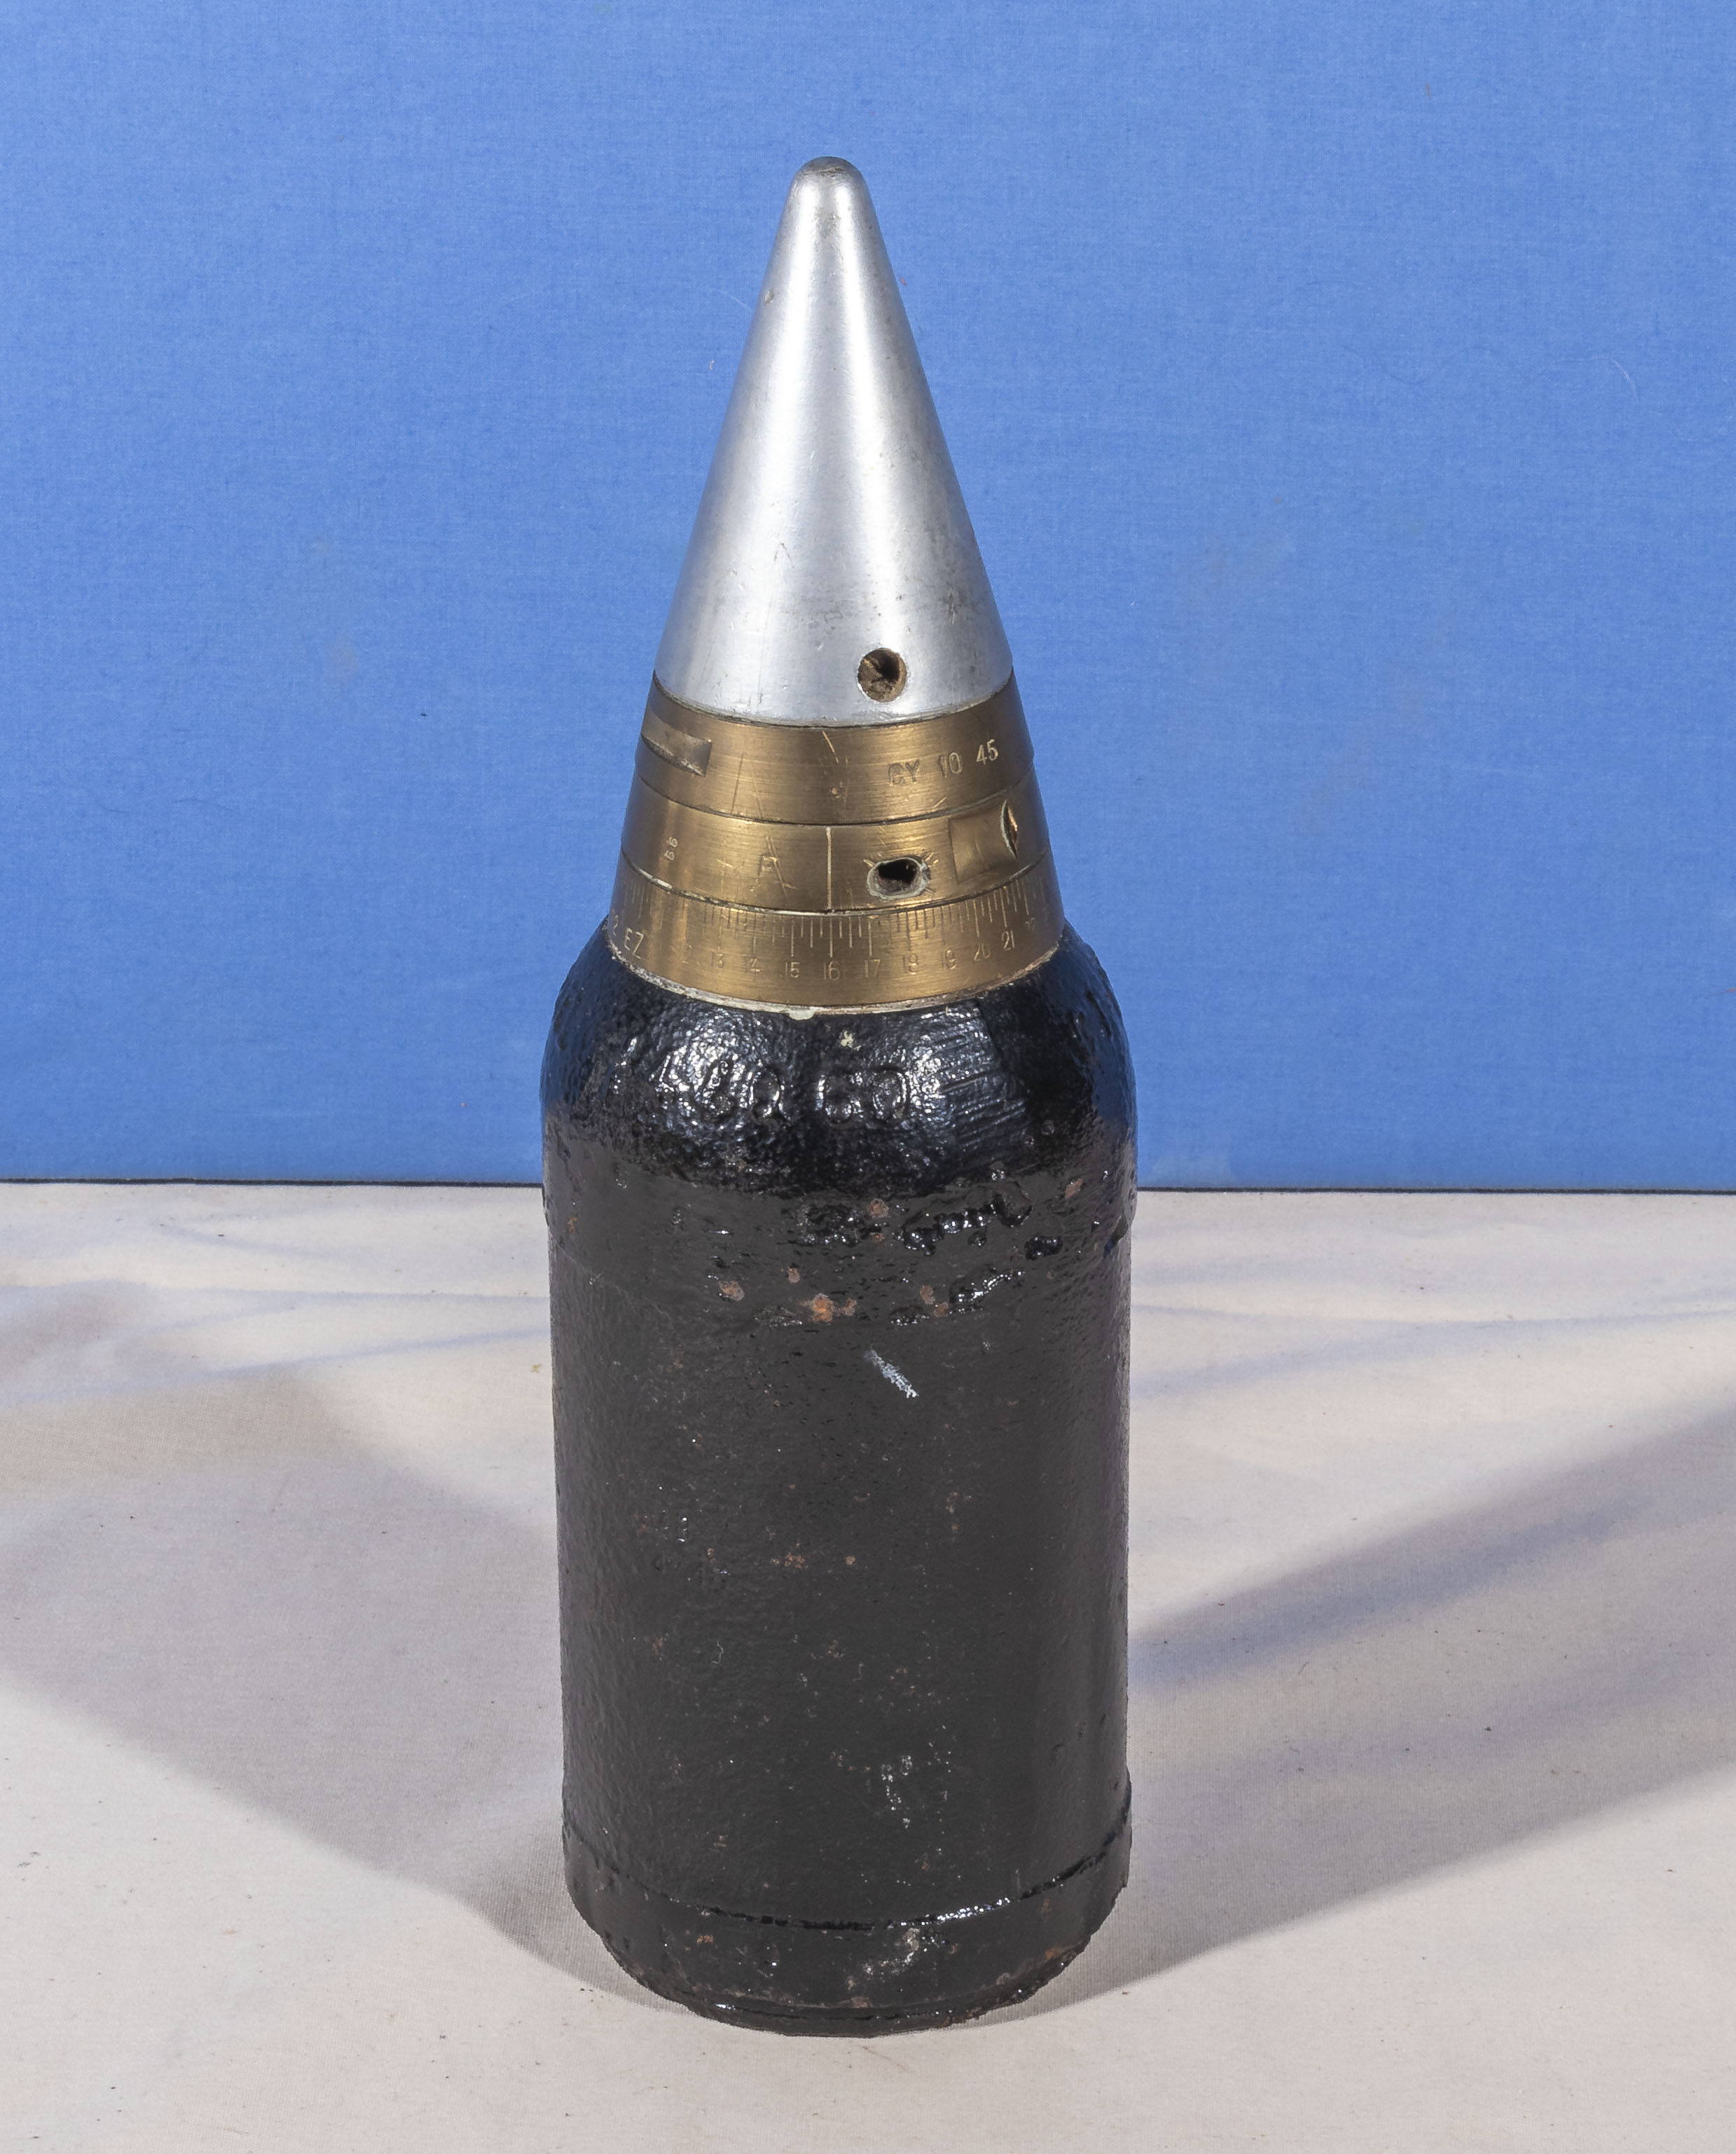 A WW2 shell marked 390 Mk 2A F2 E7, 460 Q60 CY 10 45